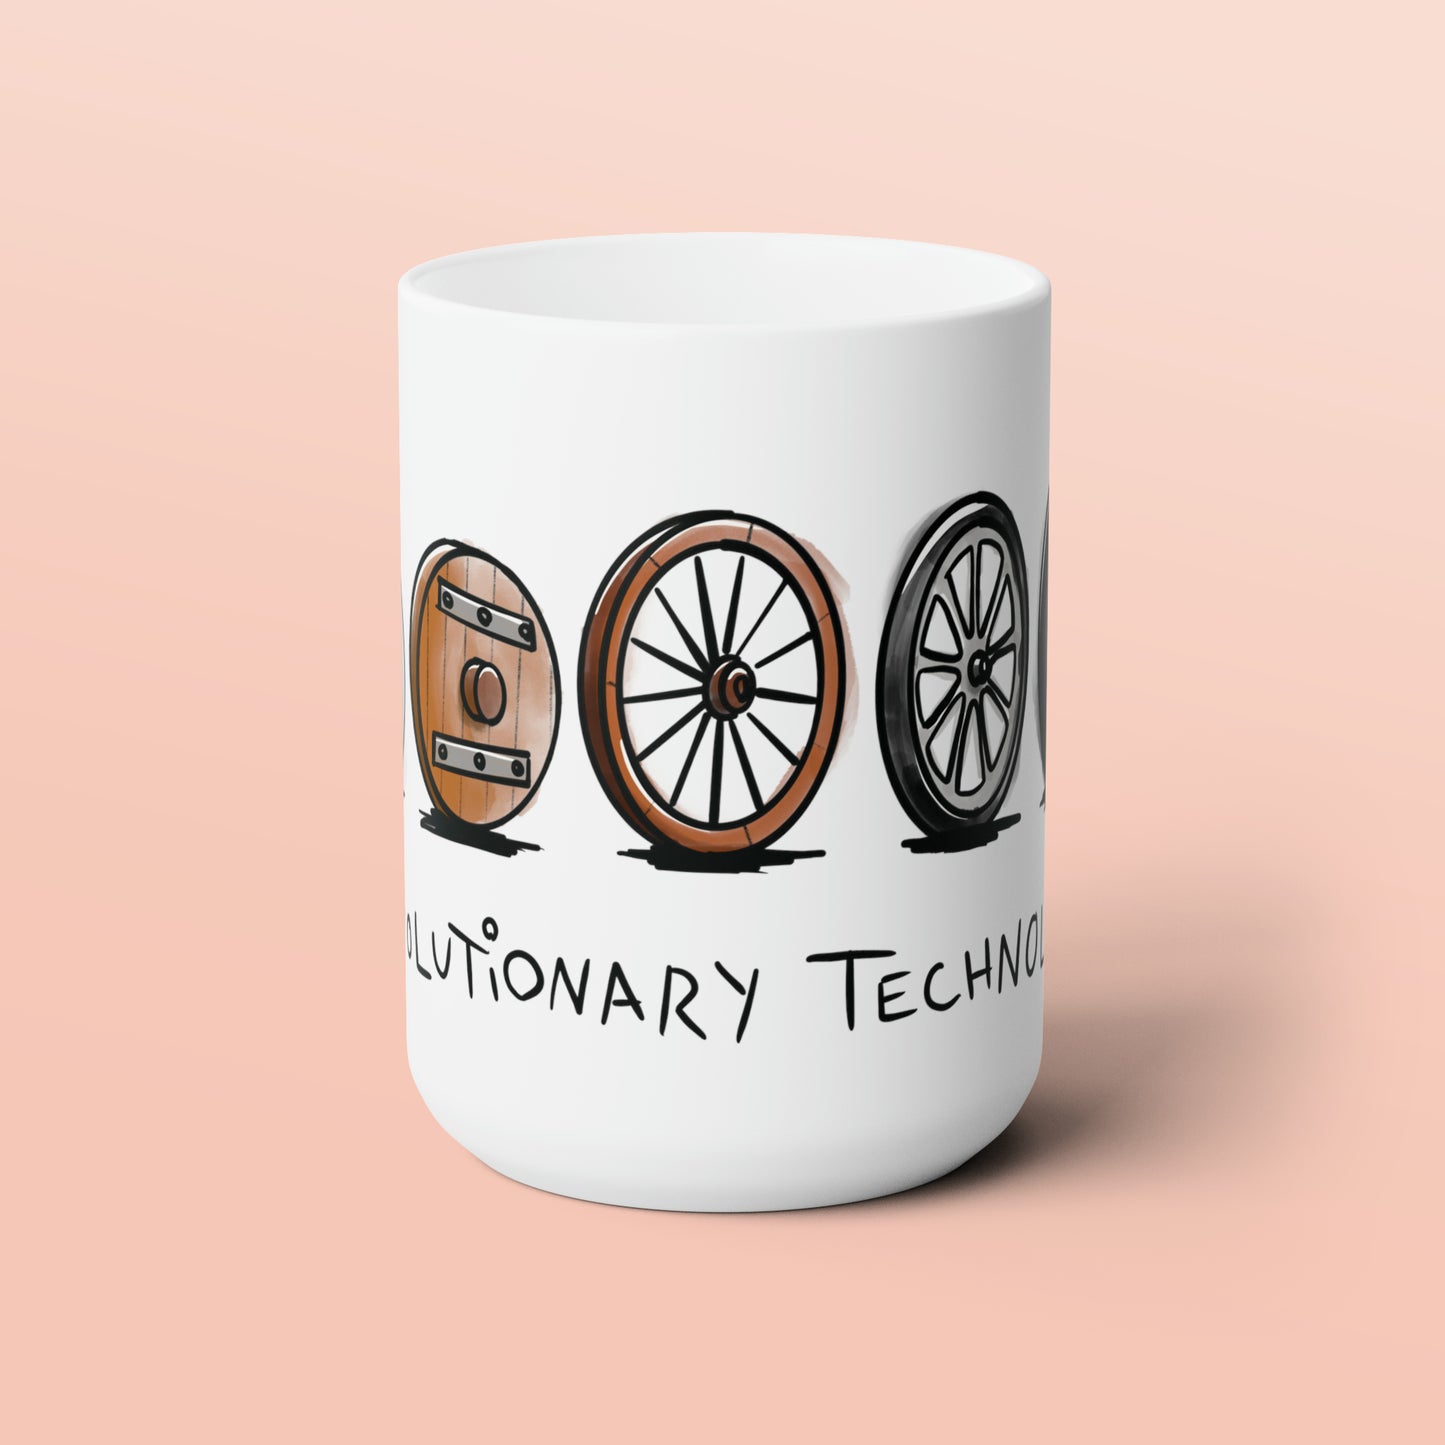 Revolutionary Technology Mug